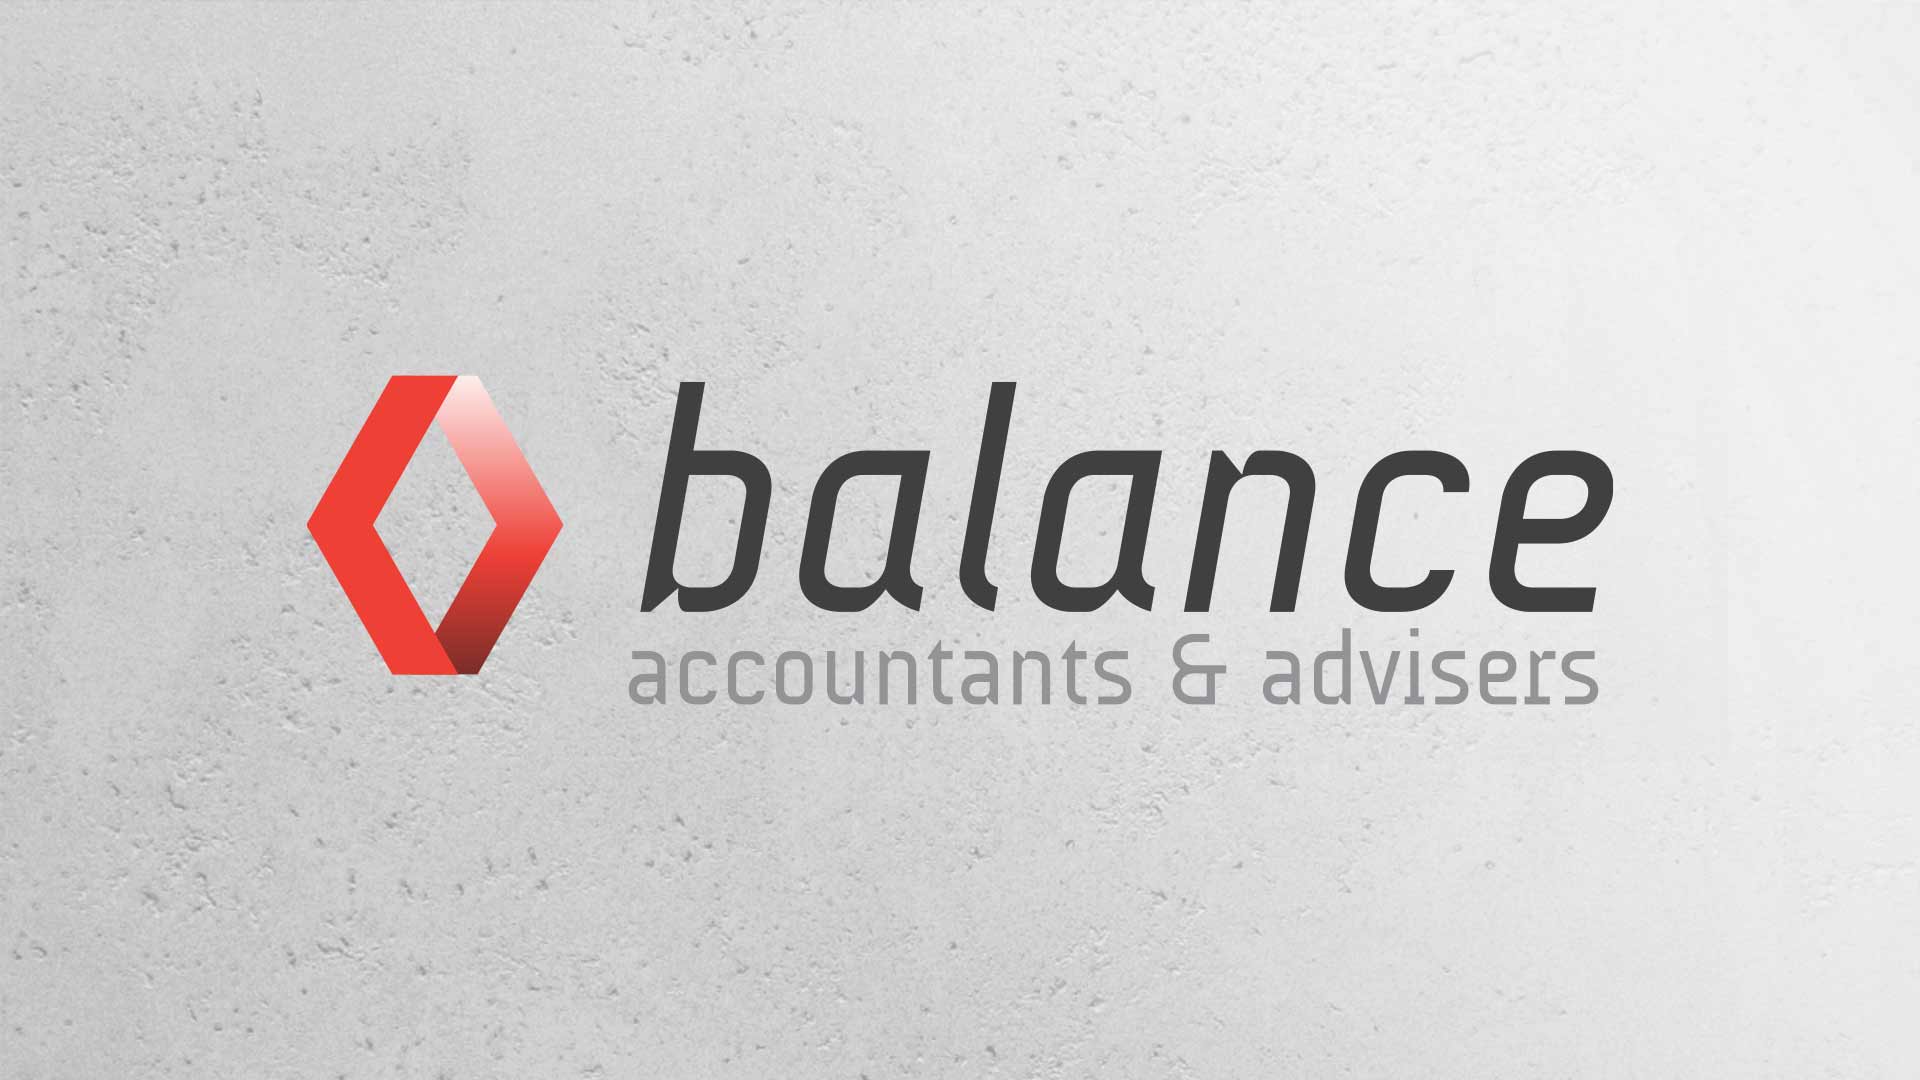 award winning accountant logo design